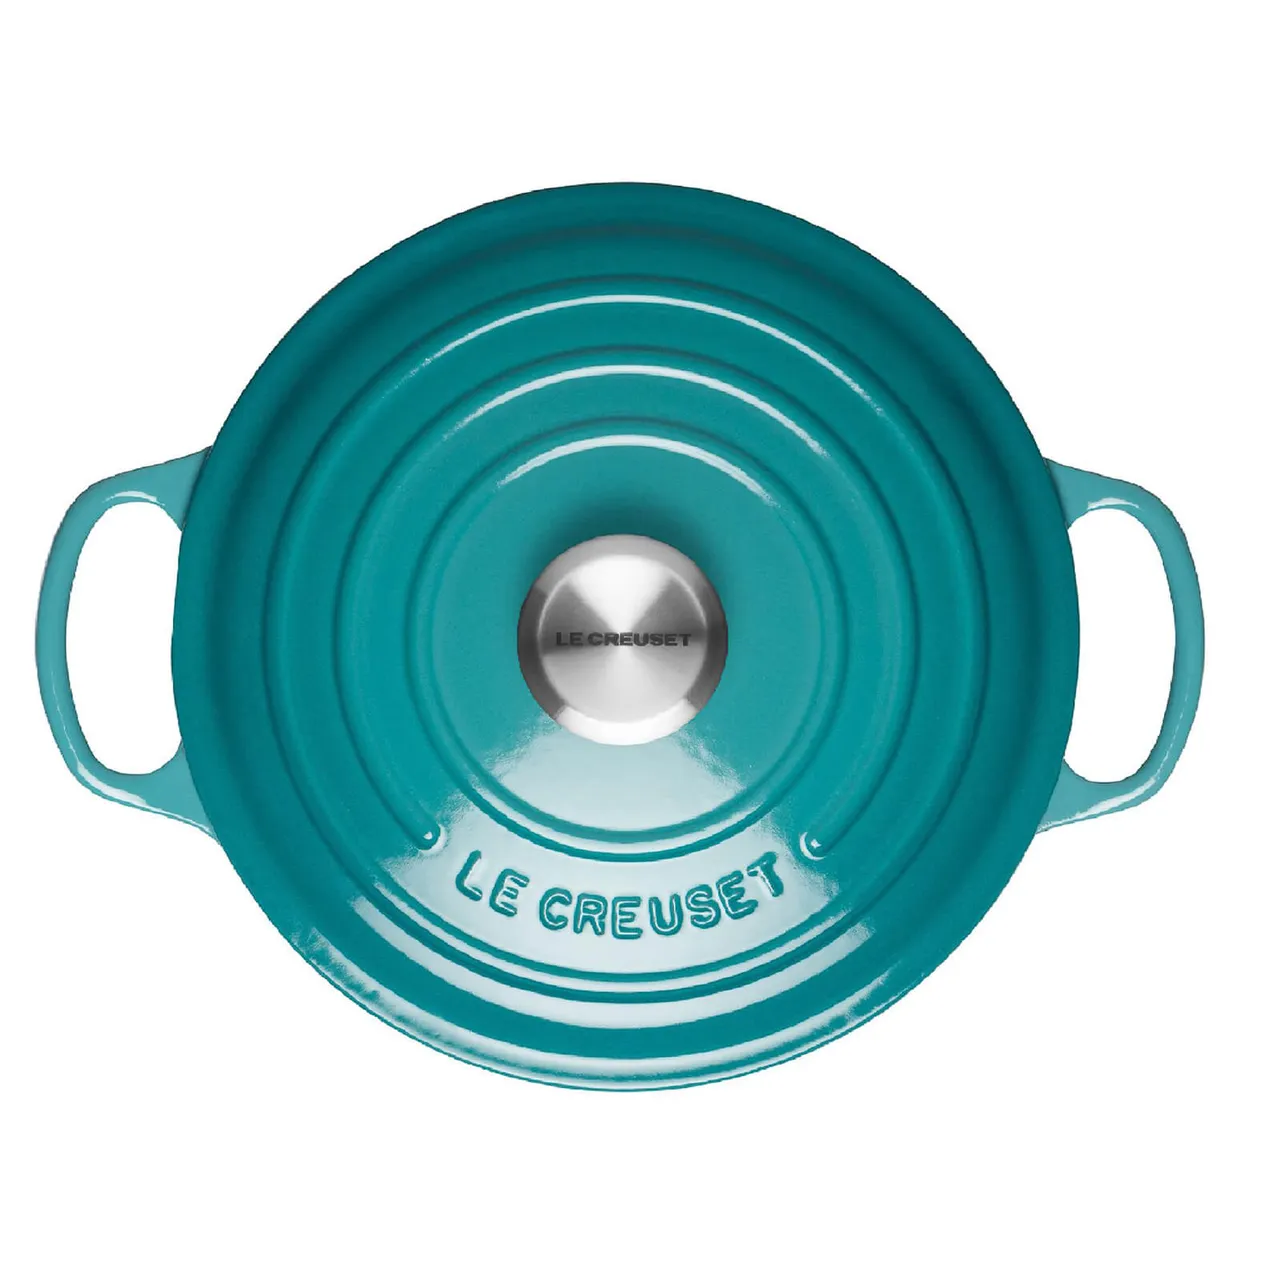 Le Creuset Signature Cast Iron Round Casserole Dish - 24cm - Teal